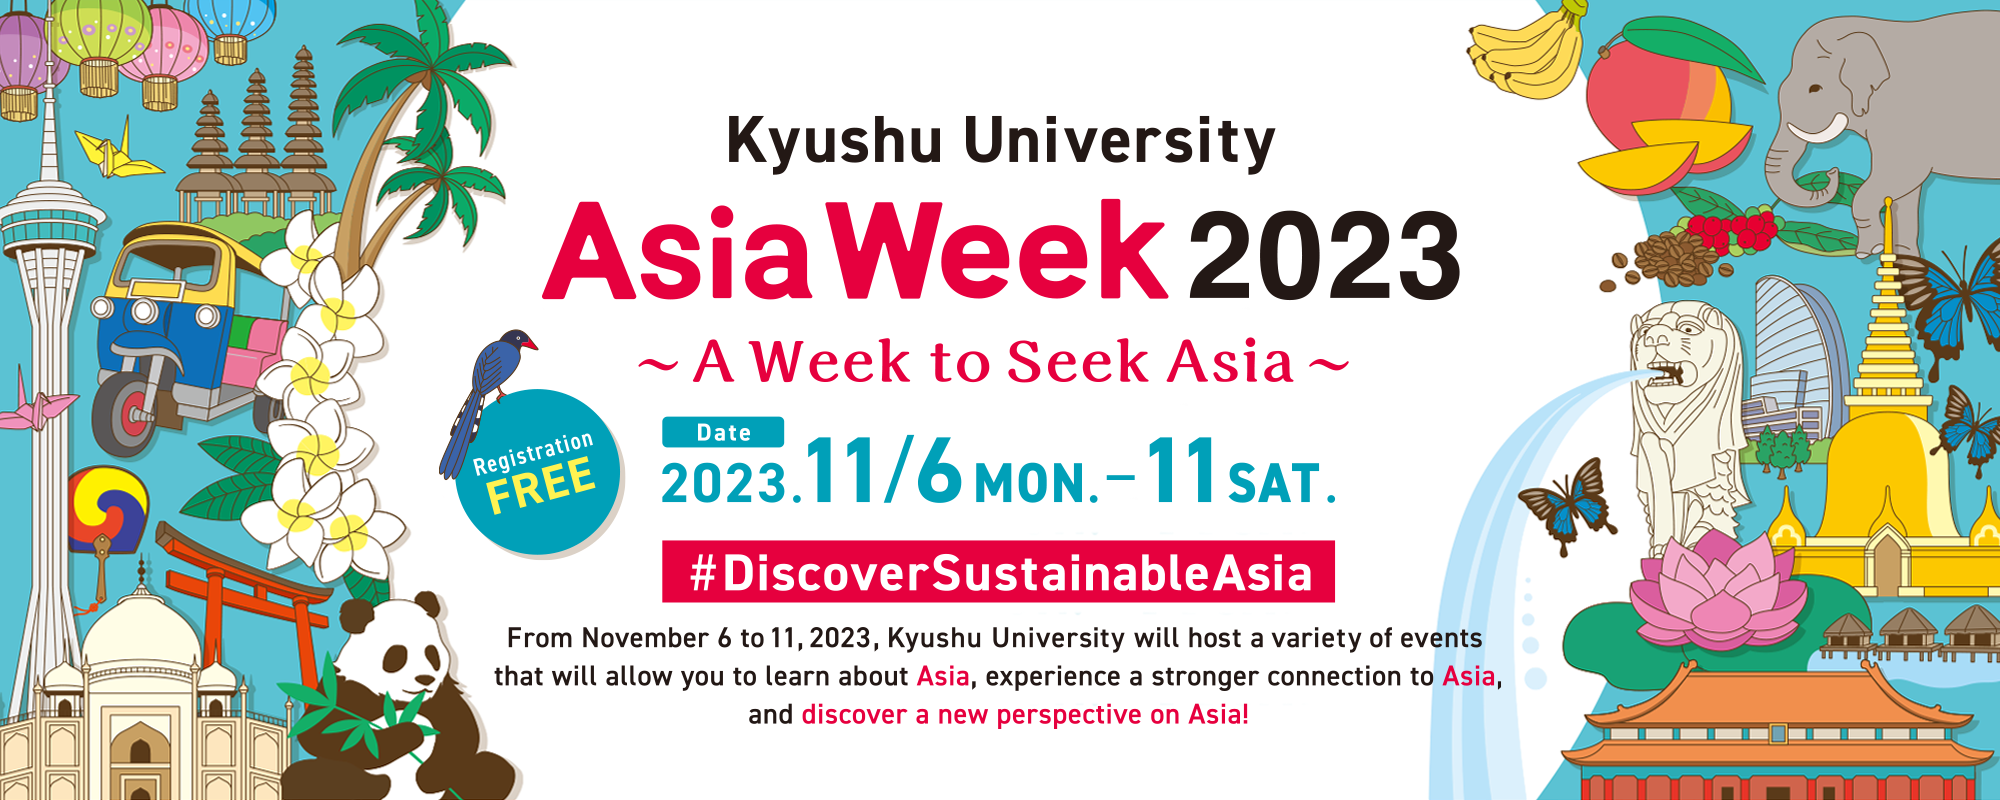 Kyushu University Asia Week 2023